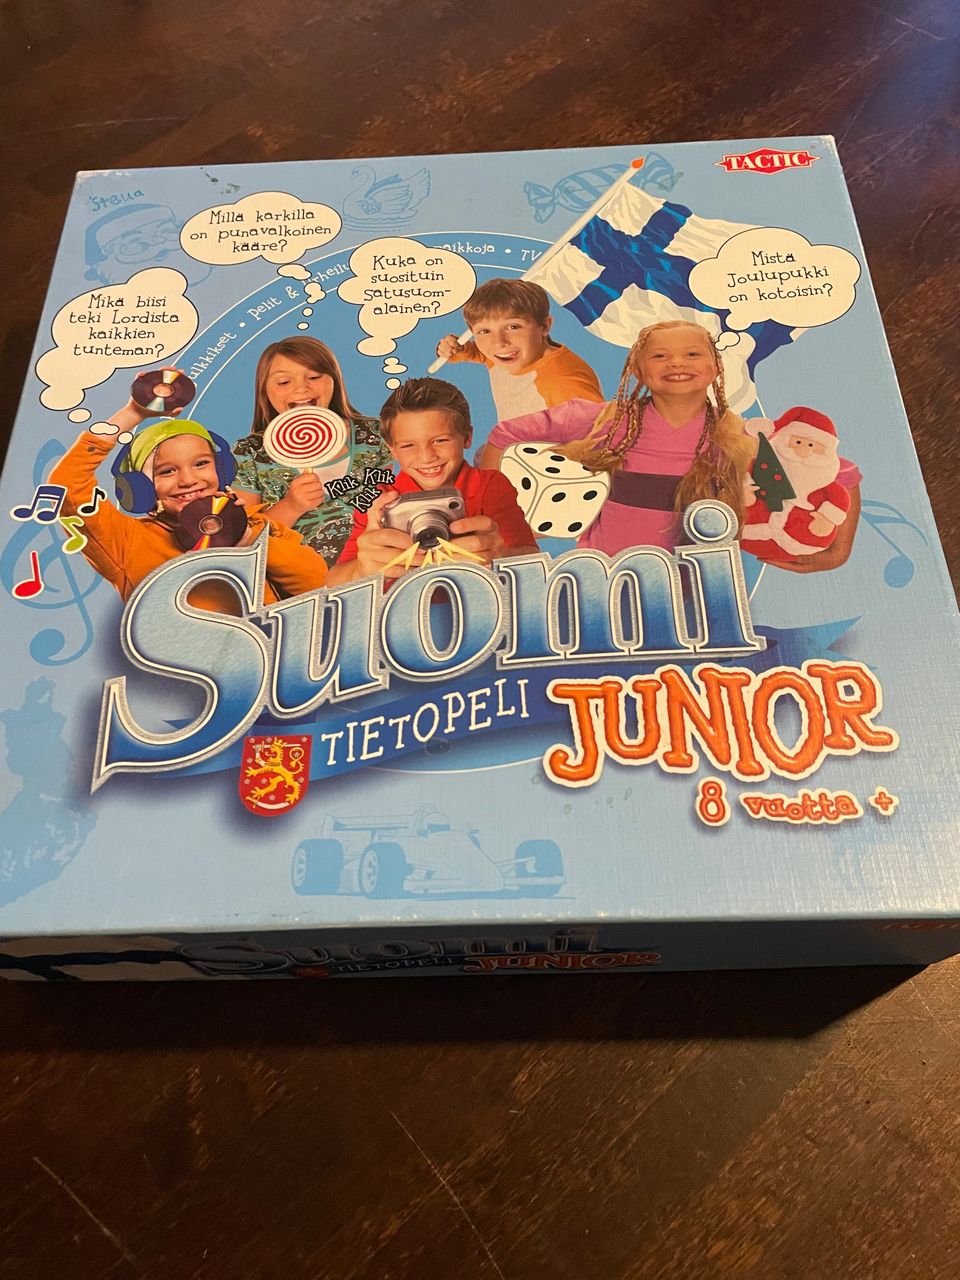 Suomi-junior tietopeli -Mikkeli